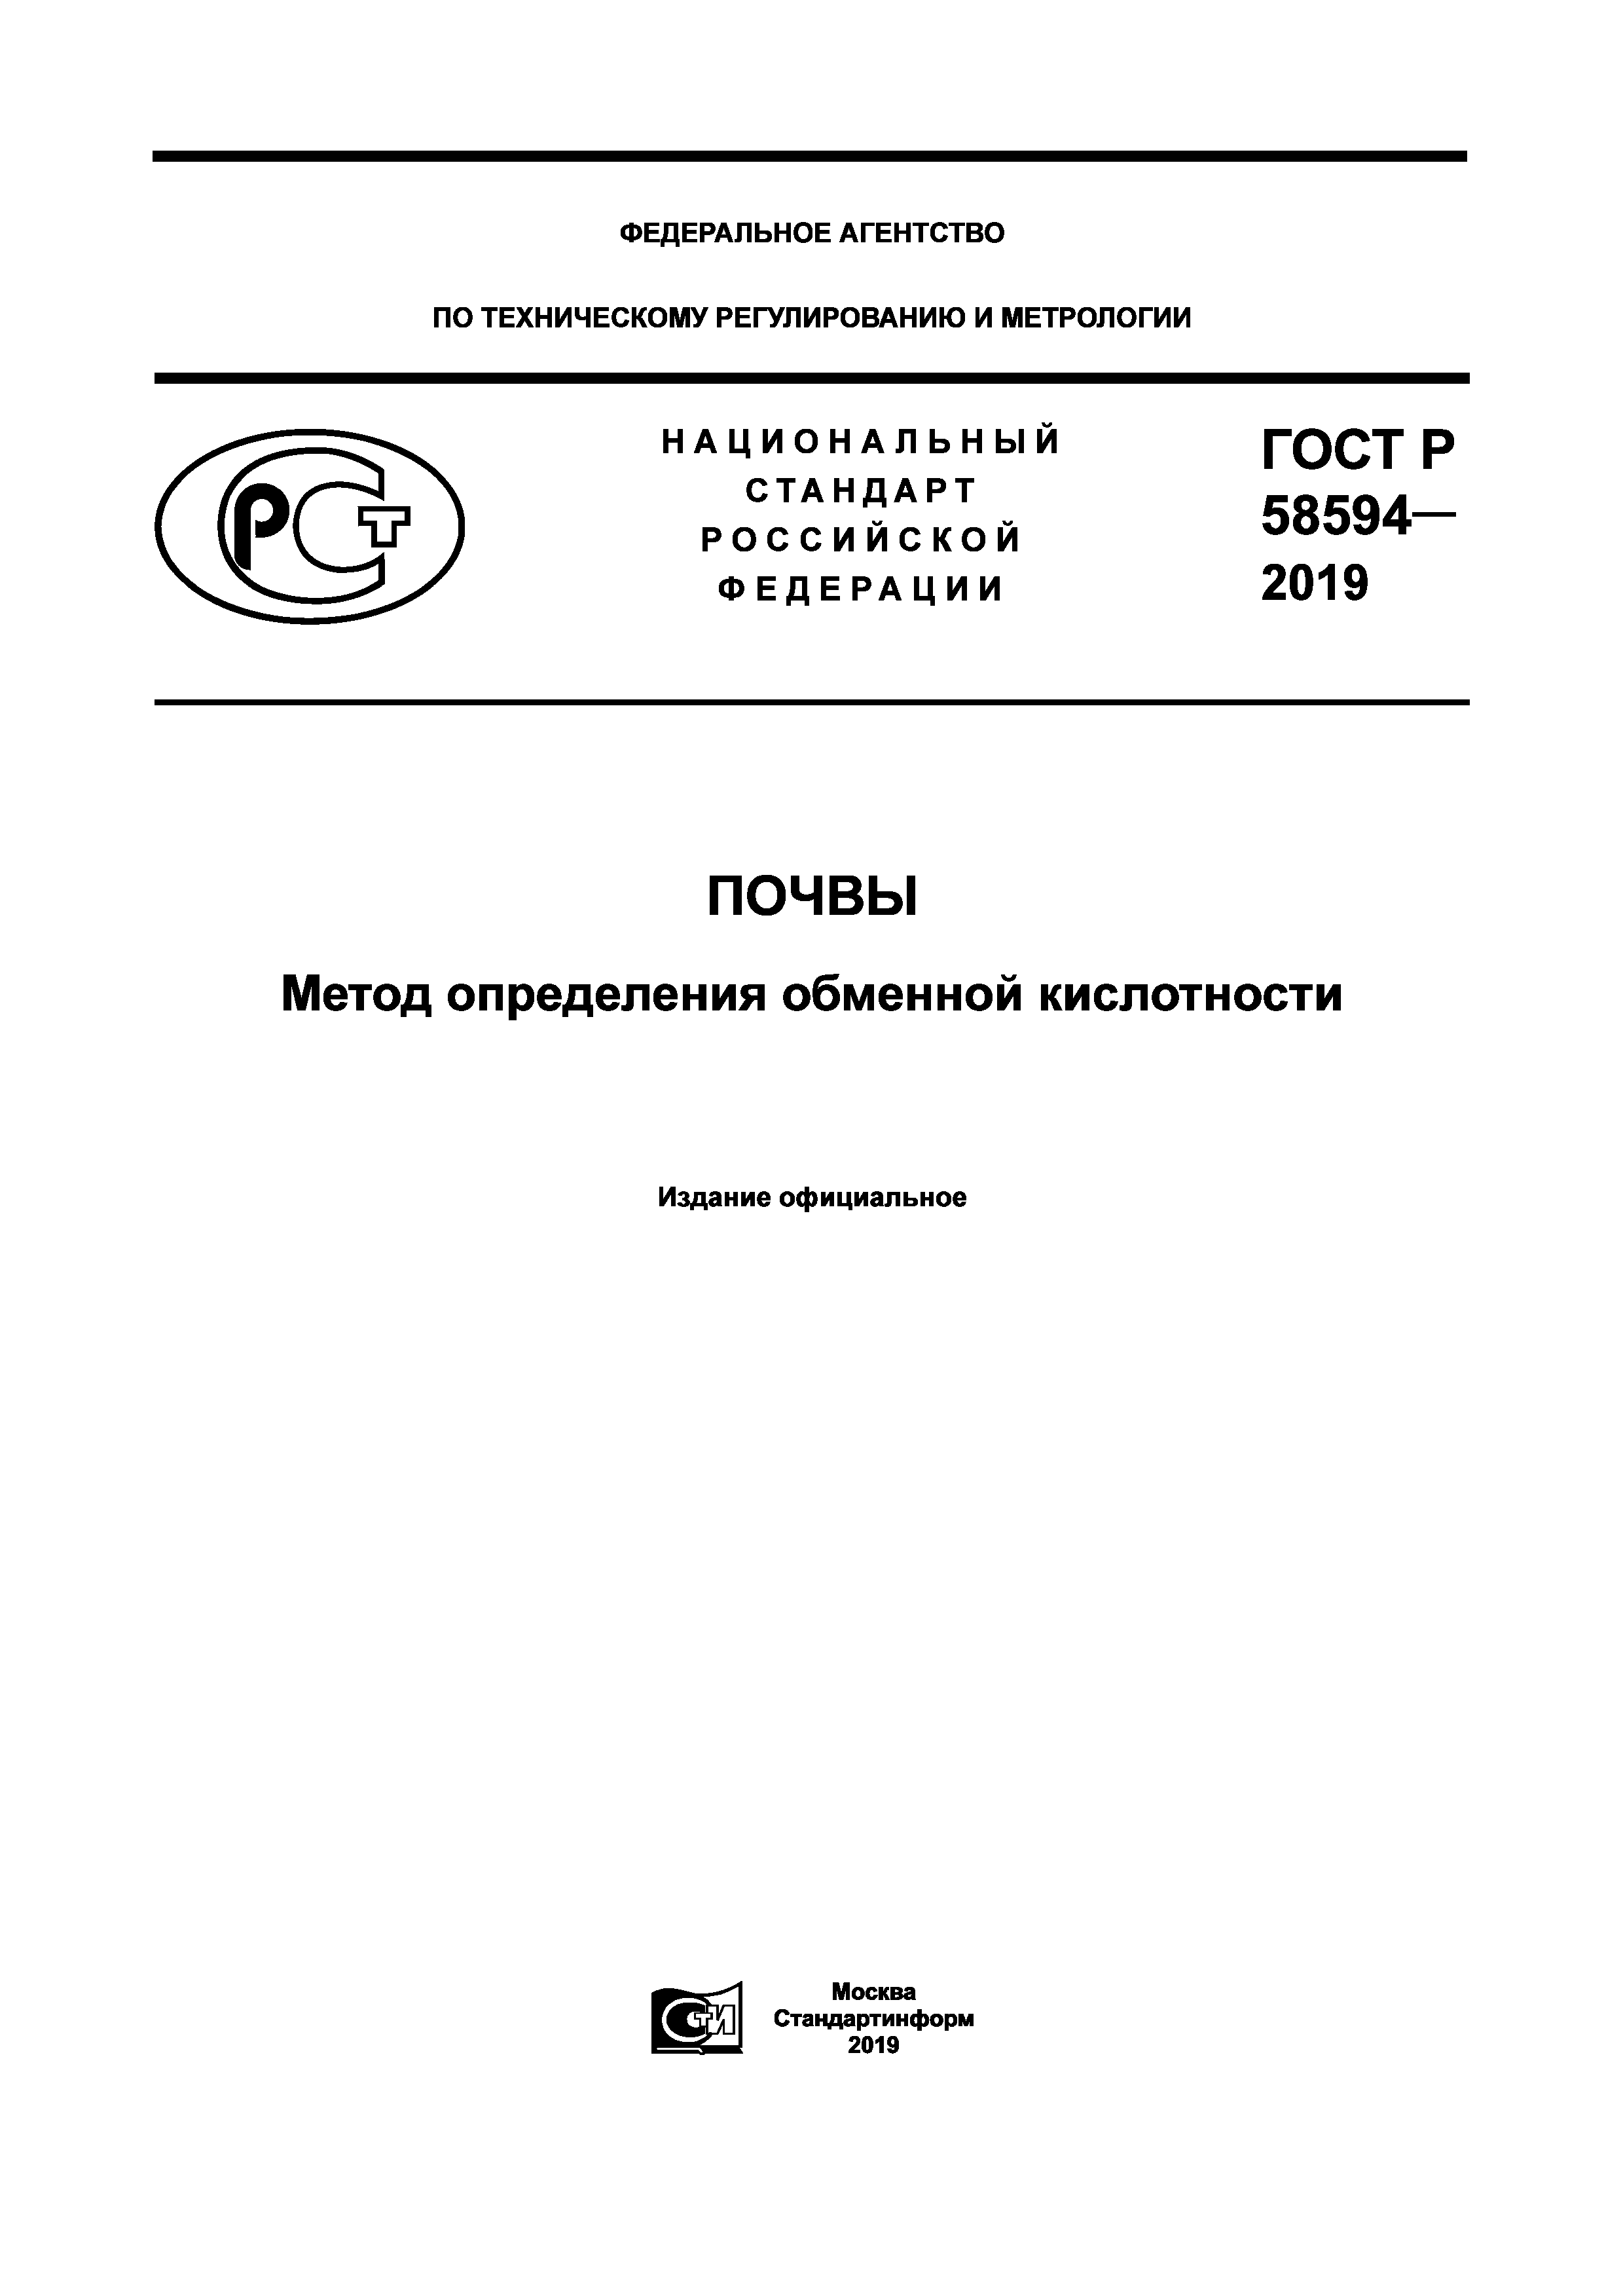 ГОСТ Р 58594-2019